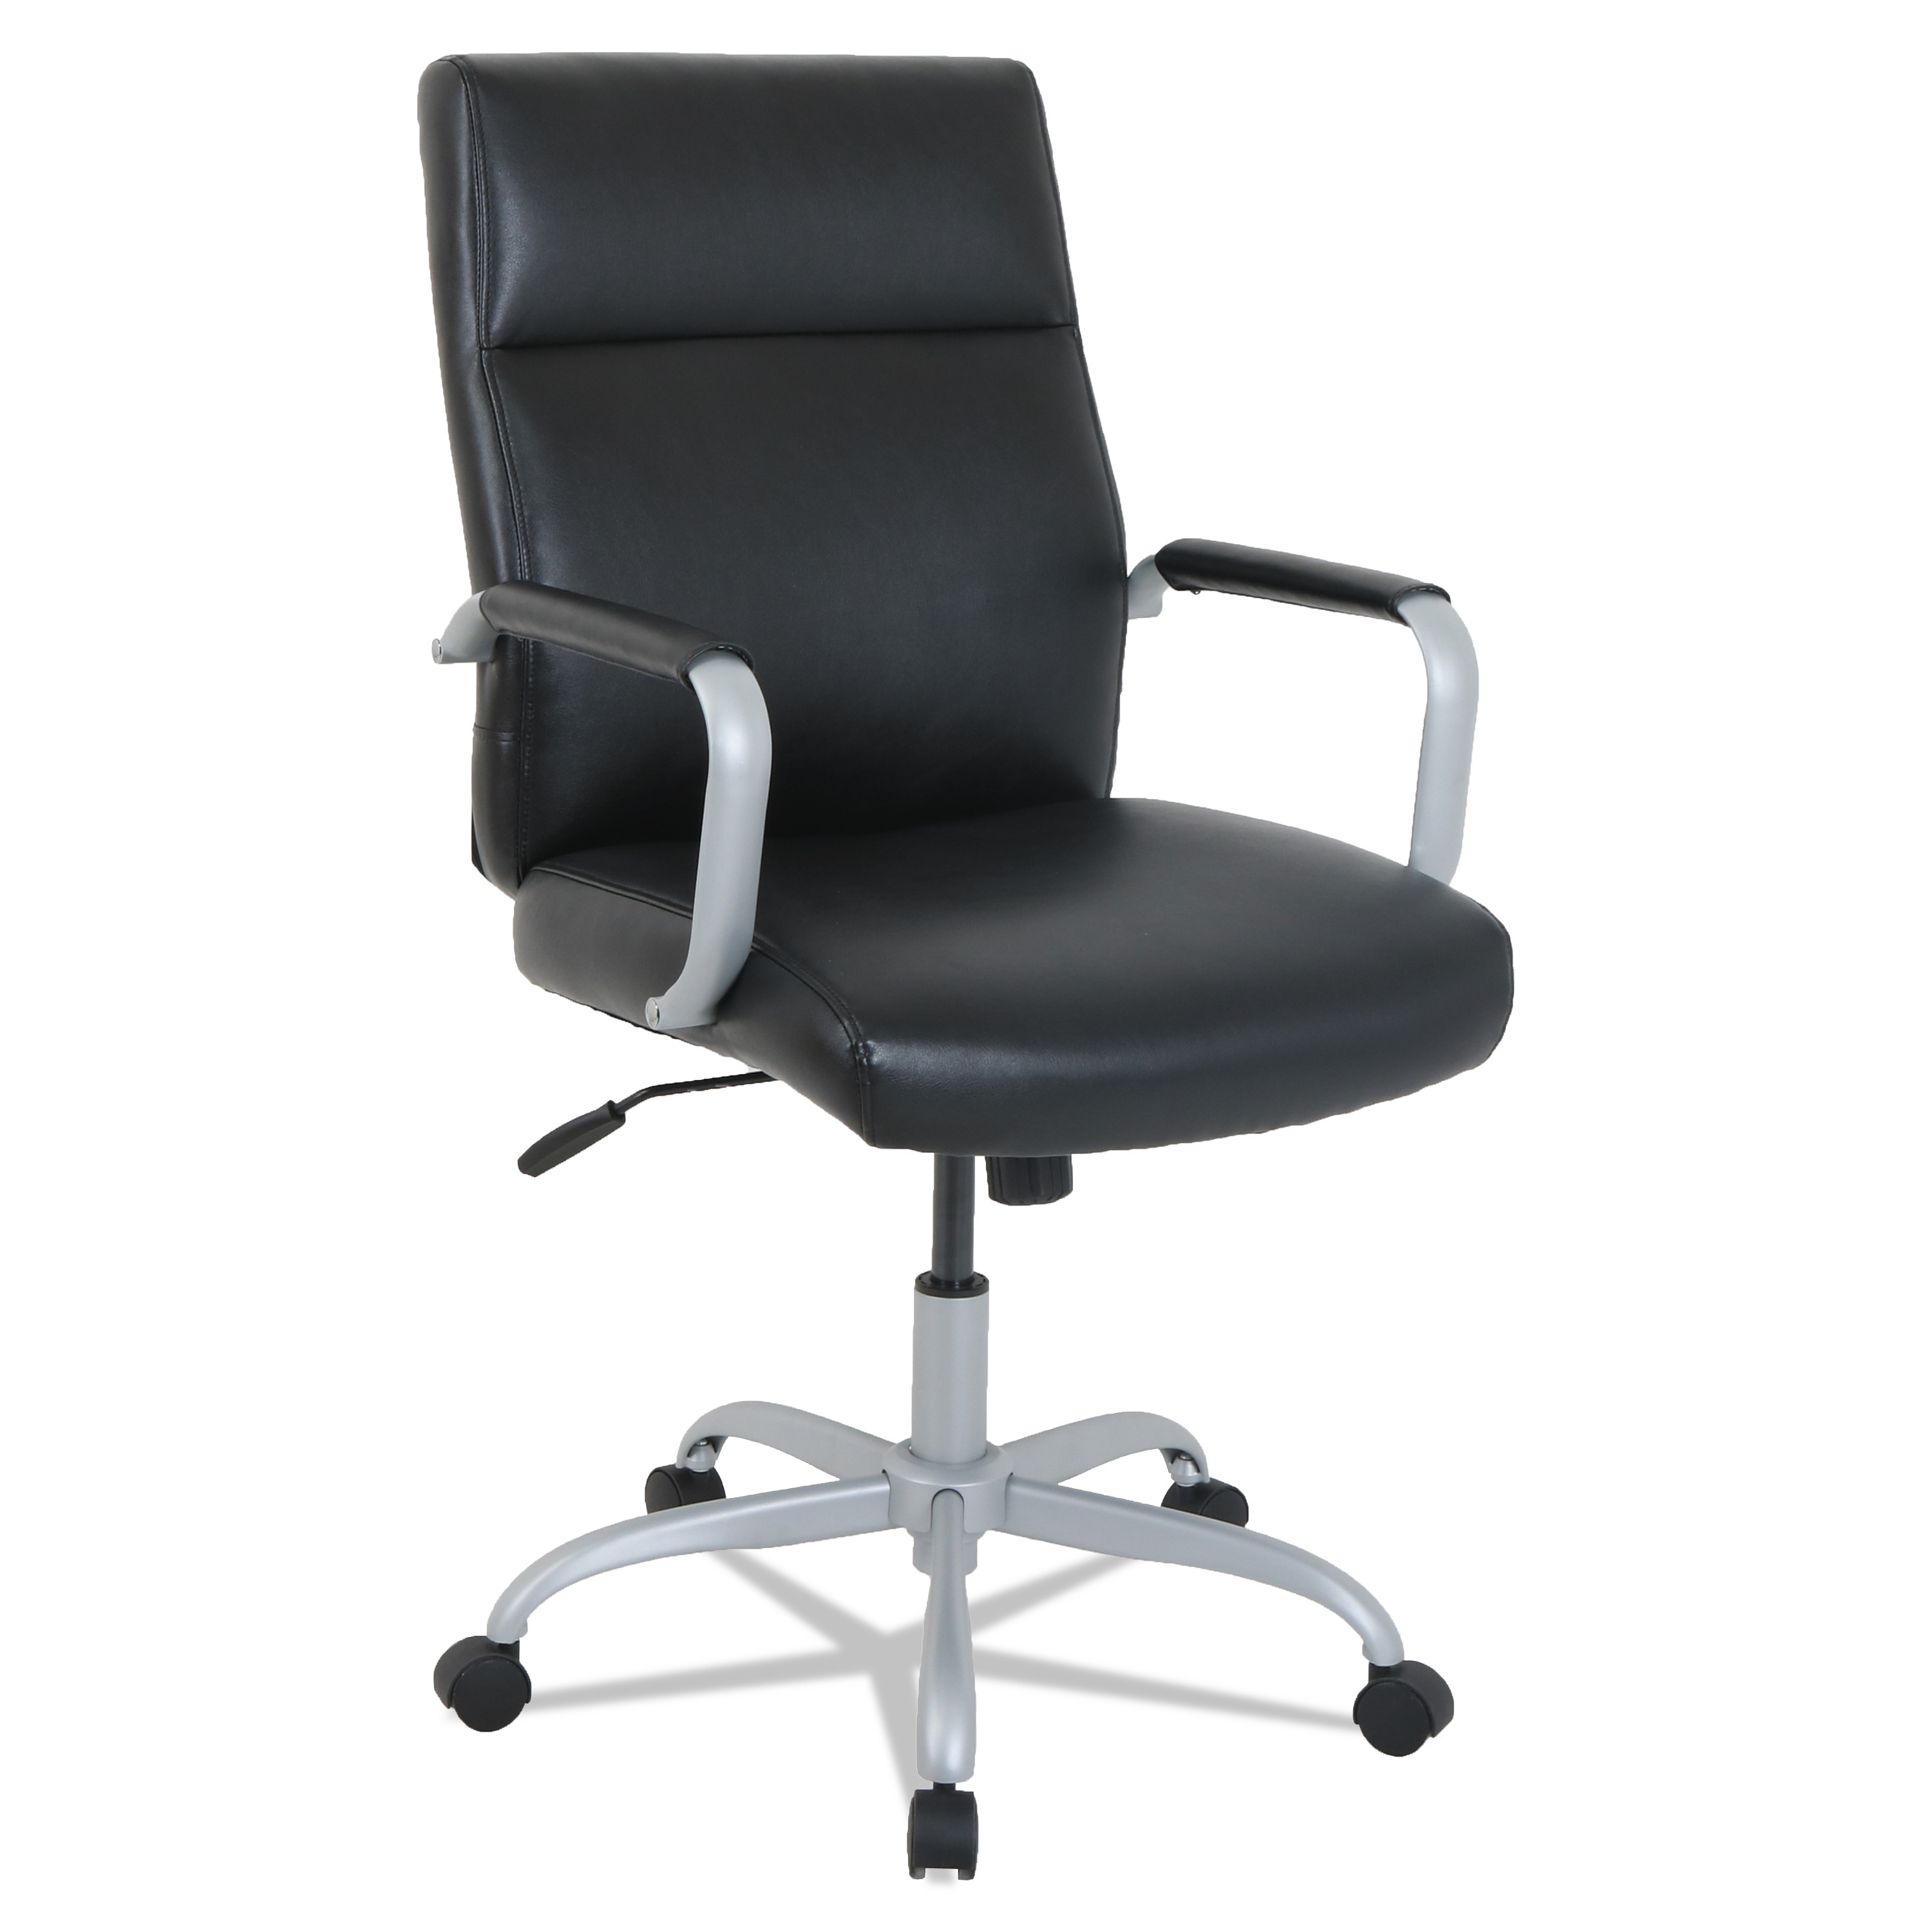  Alera KA24119 kathy ireland OFFICE by Alera Manitou High-Back Leather Office Chair, Up to 275 lbs., Black Seat/Back, Smoking Gray Base (ALEKA24119) 